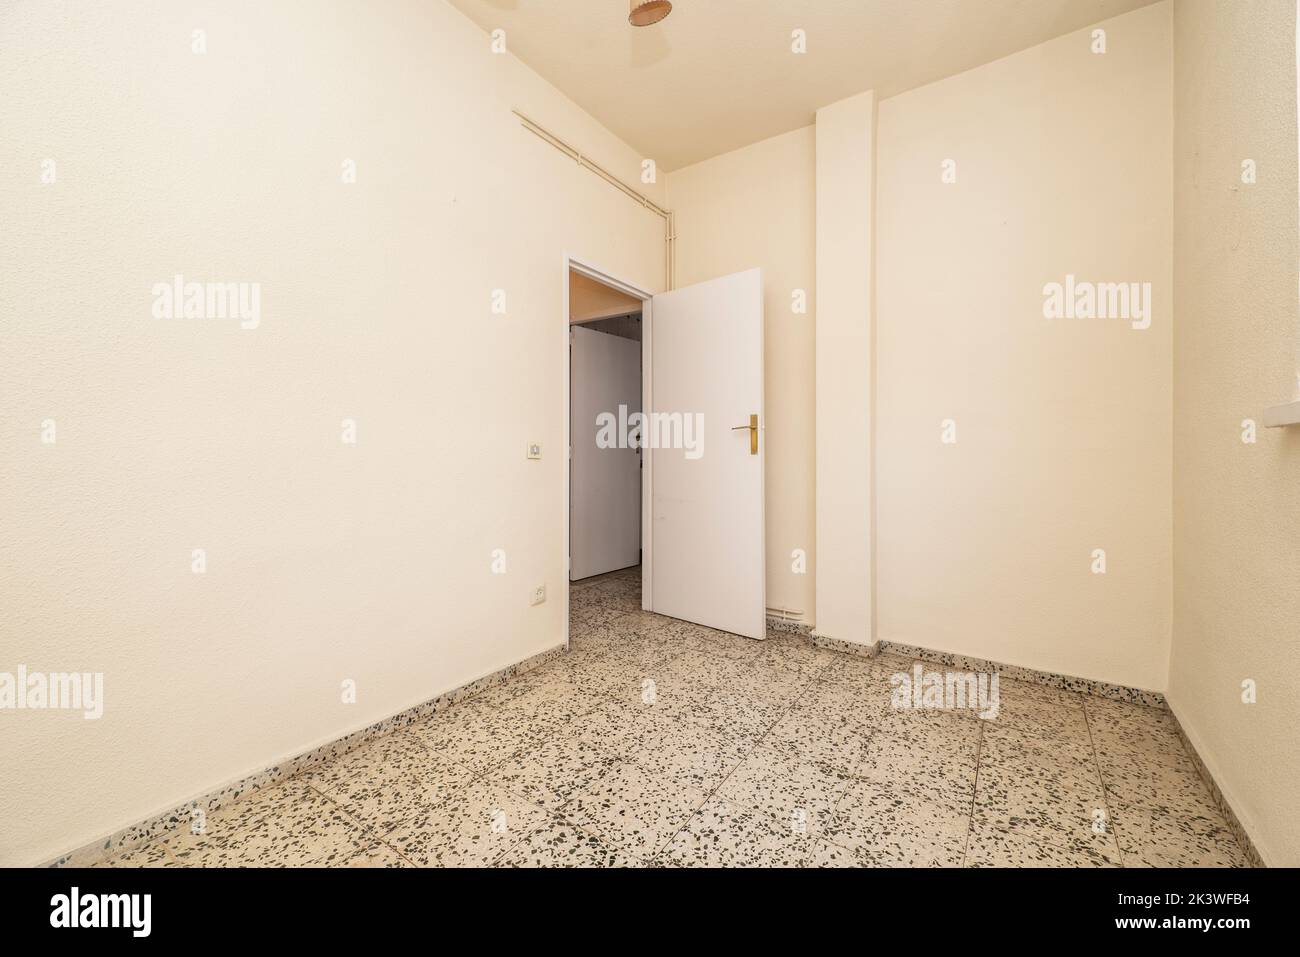 Empty room terrazzo flooring, cream painted walls and simple white wooden door Stock Photo